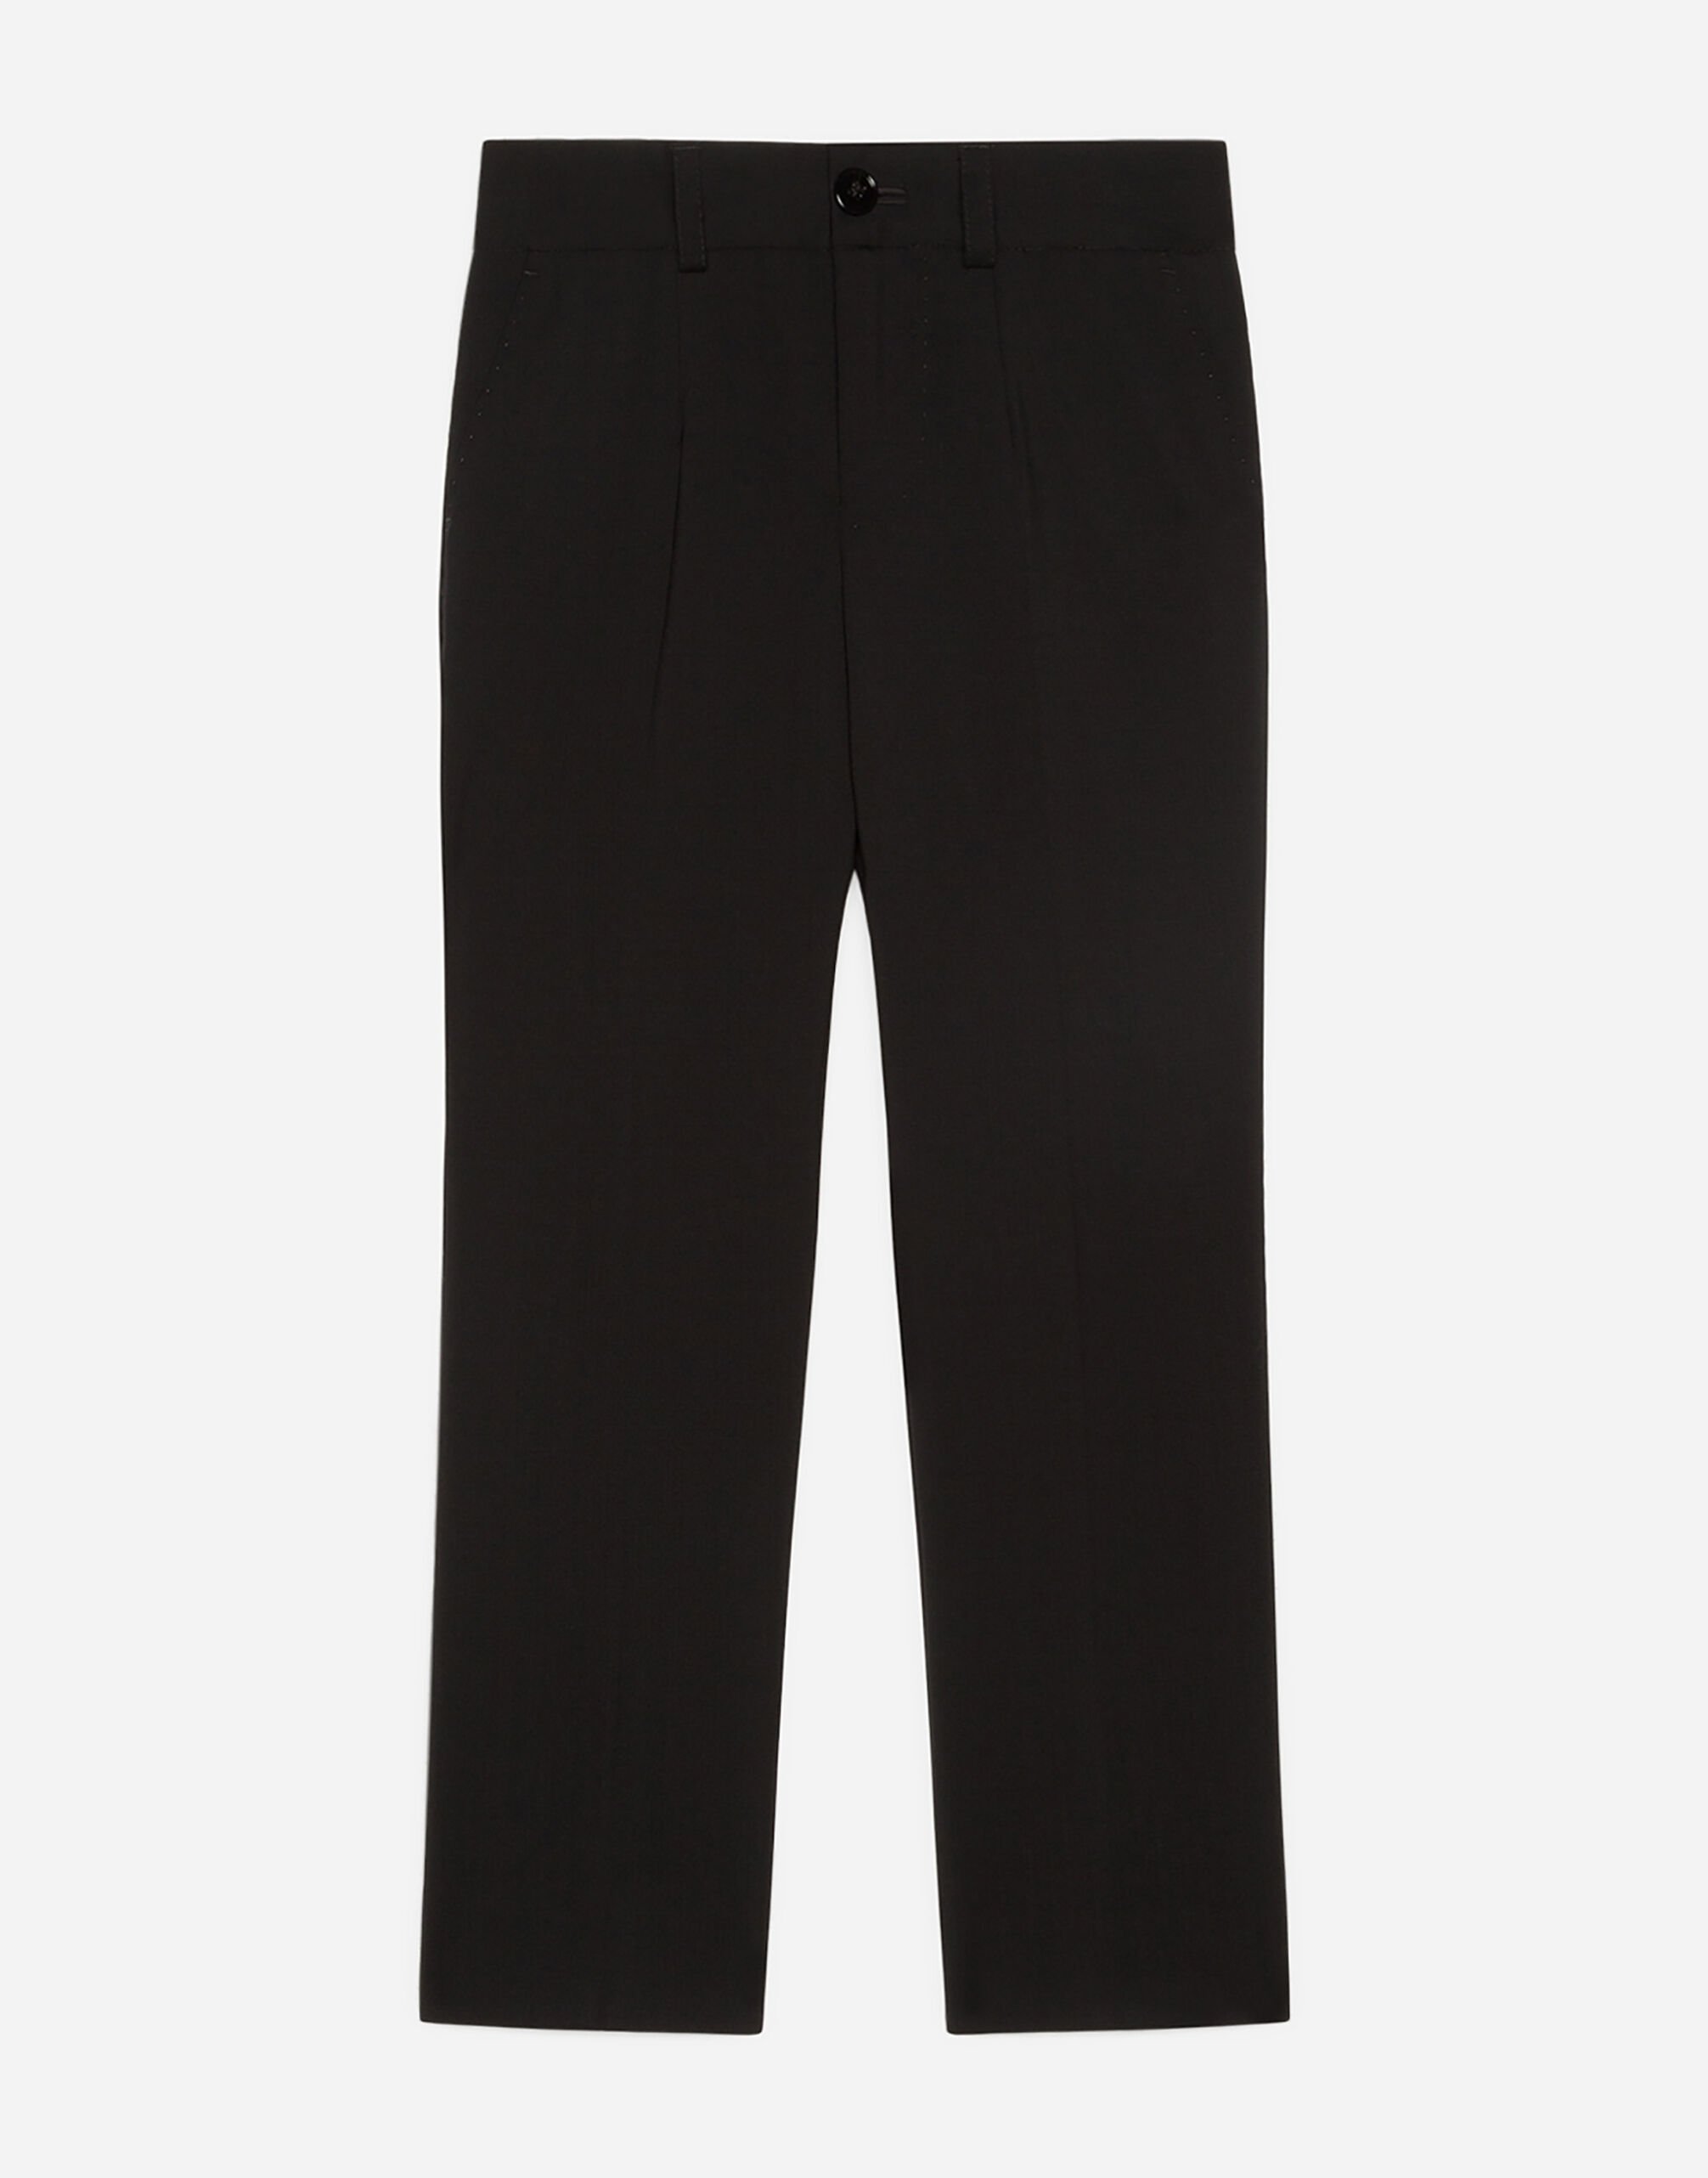 Dolce & Gabbana Stretch wool pants Black EB0003AB000